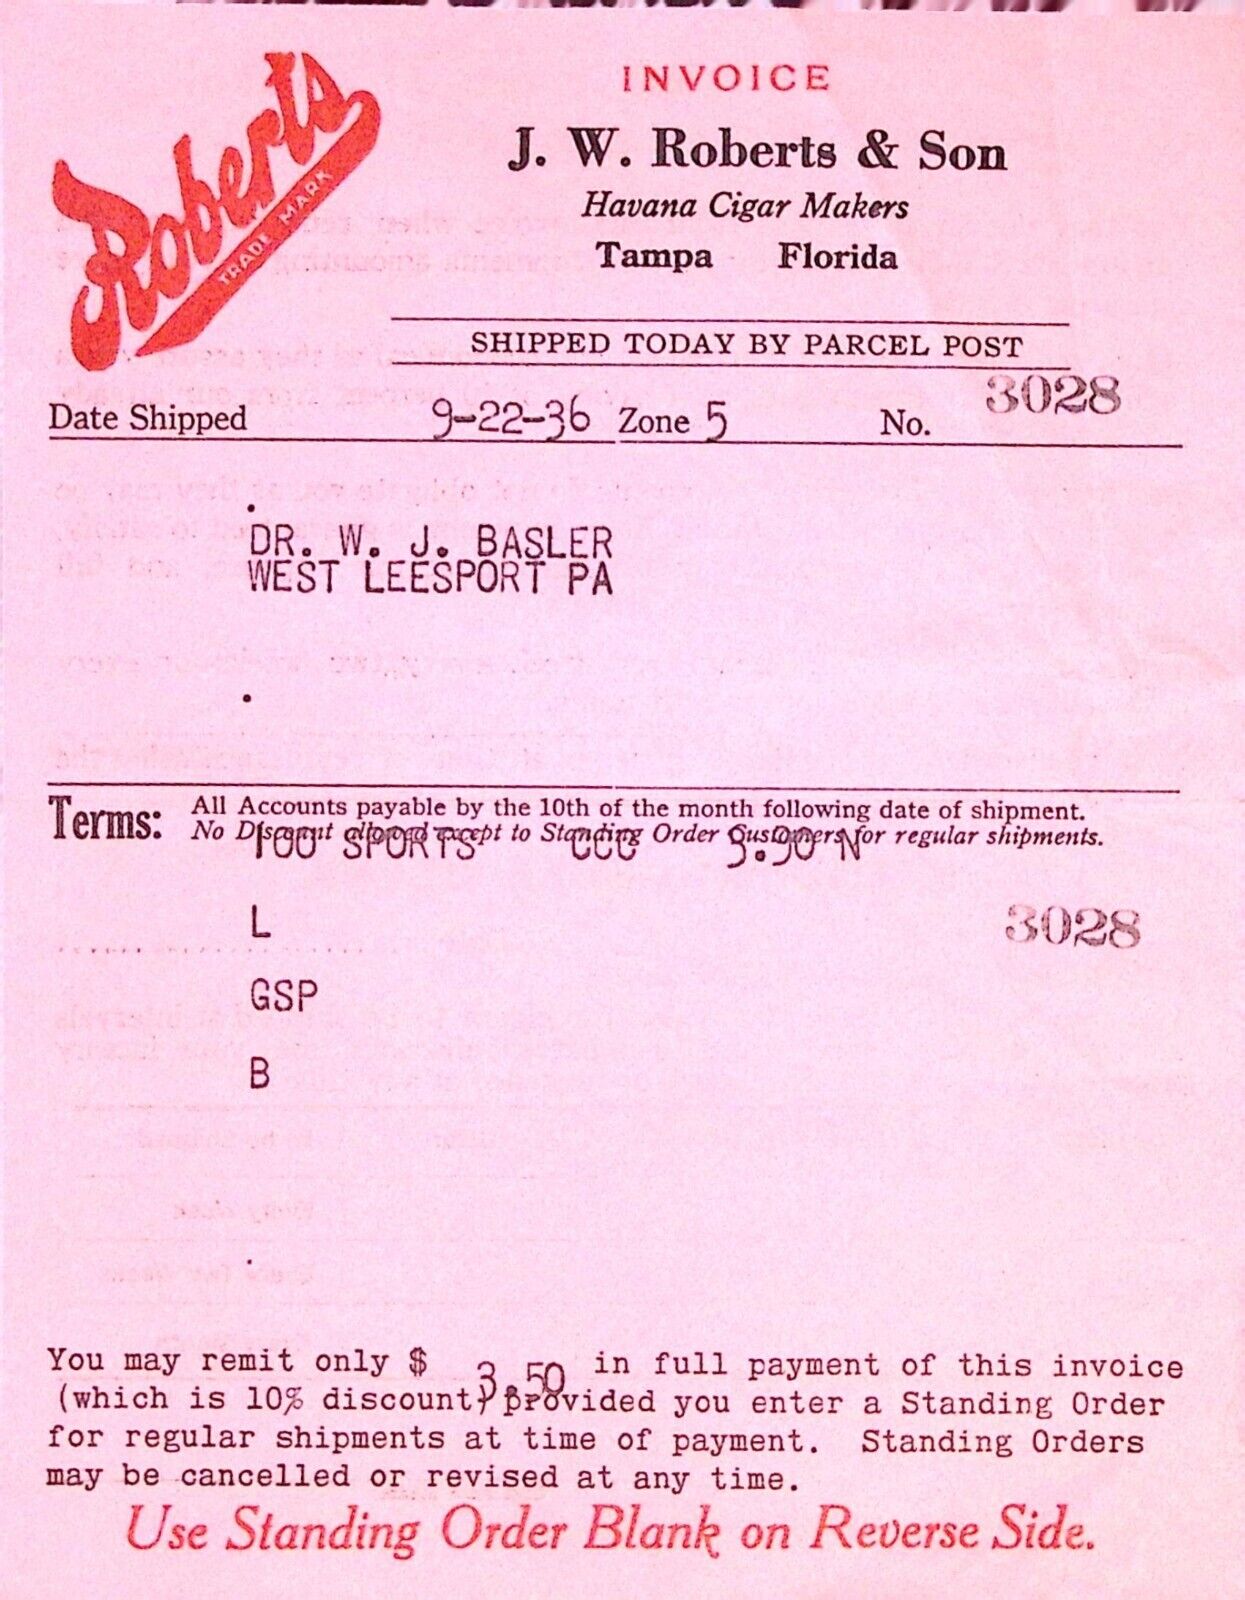 J.W. Roberts & Son Havana Cigar Makers 1936 Invoice Tampa Florida